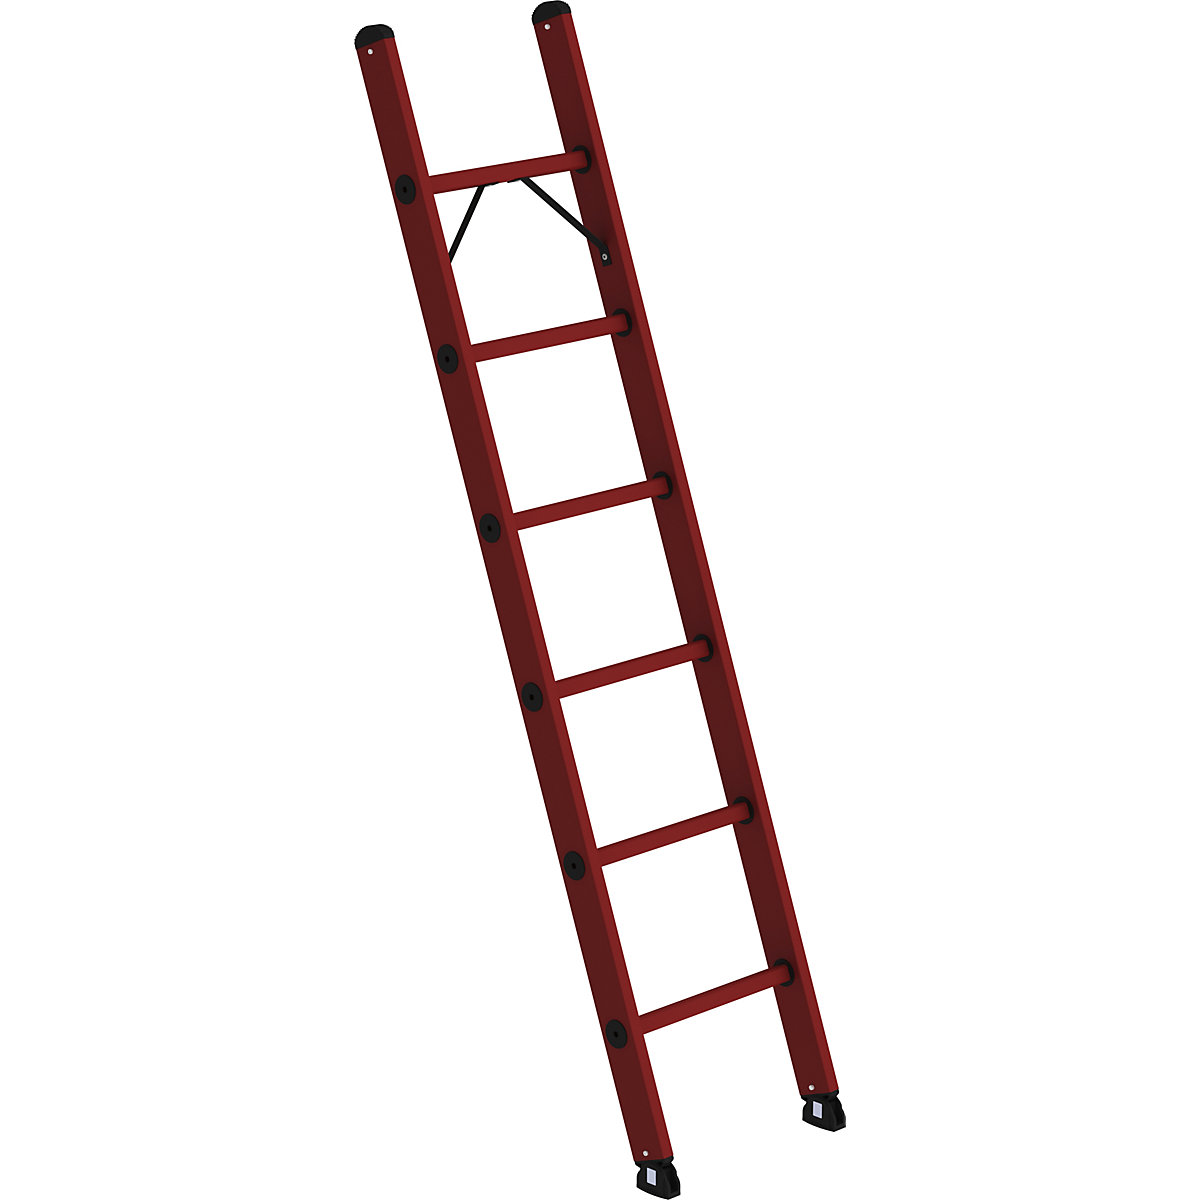 Full plastic lean to ladder – MUNK